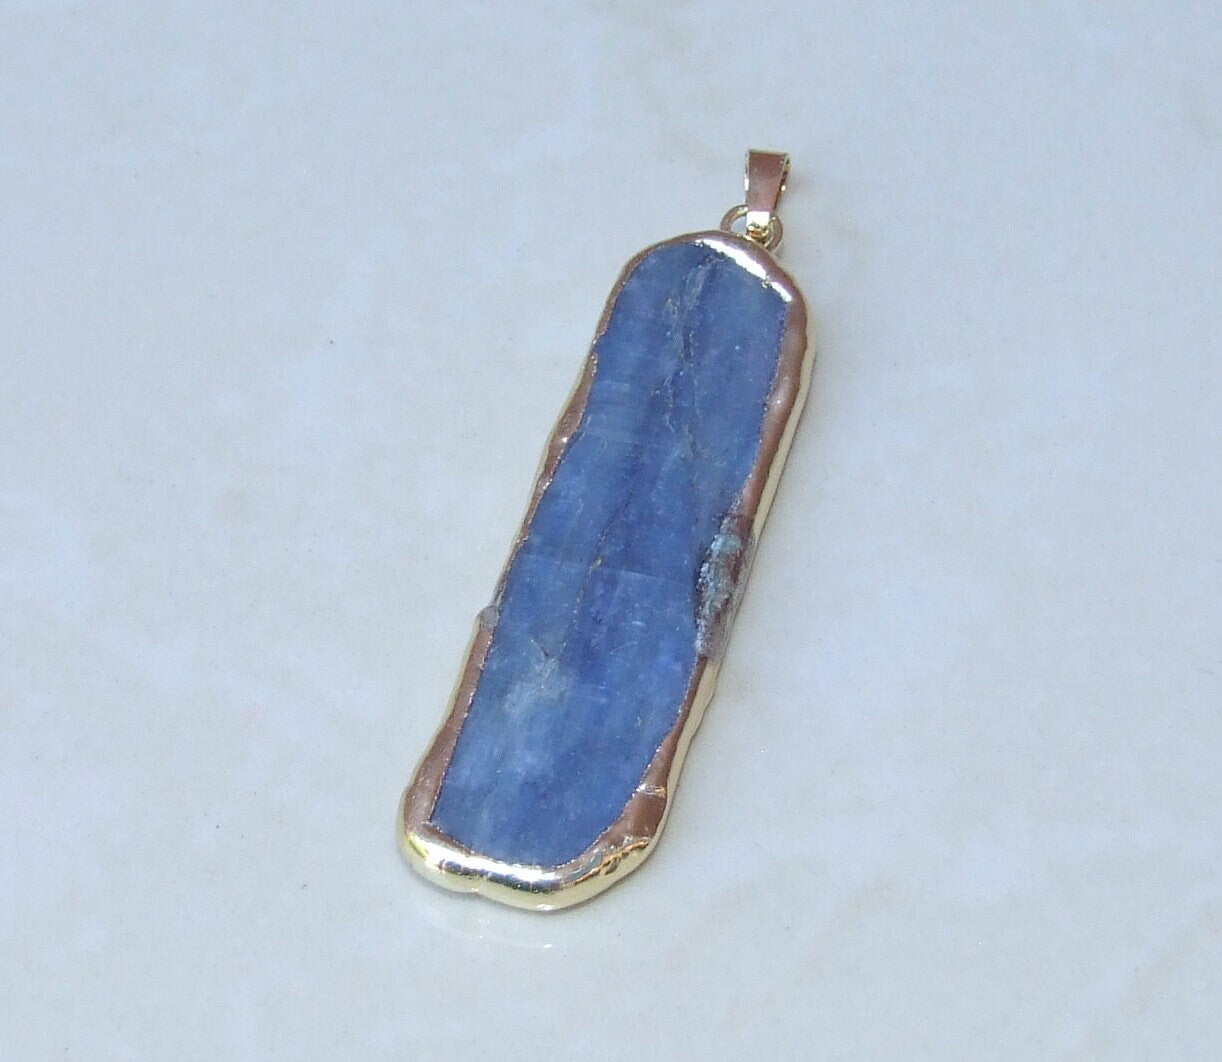 Large Blue Kyanite Pendant, Gemstone Pendant, Gold Edge, Raw Natural Kyanite, Kyanite Slice Pendant, Kyanite Beads, 15-20mm x 60-70mm